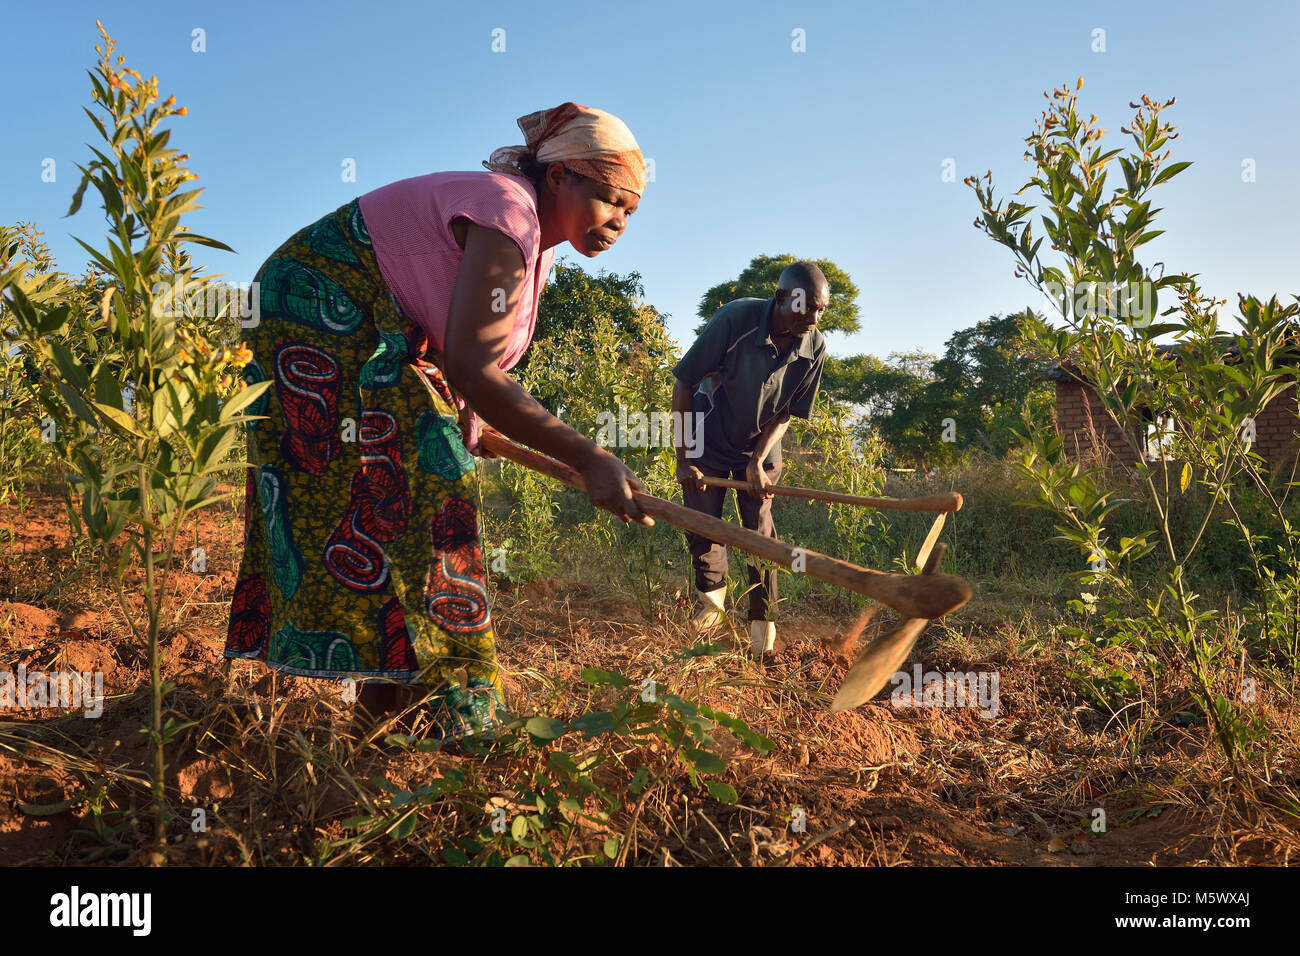 Mariet Hara and her husband Pressing Moyo work on their farm in Edundu, Malawi. Stock Photo